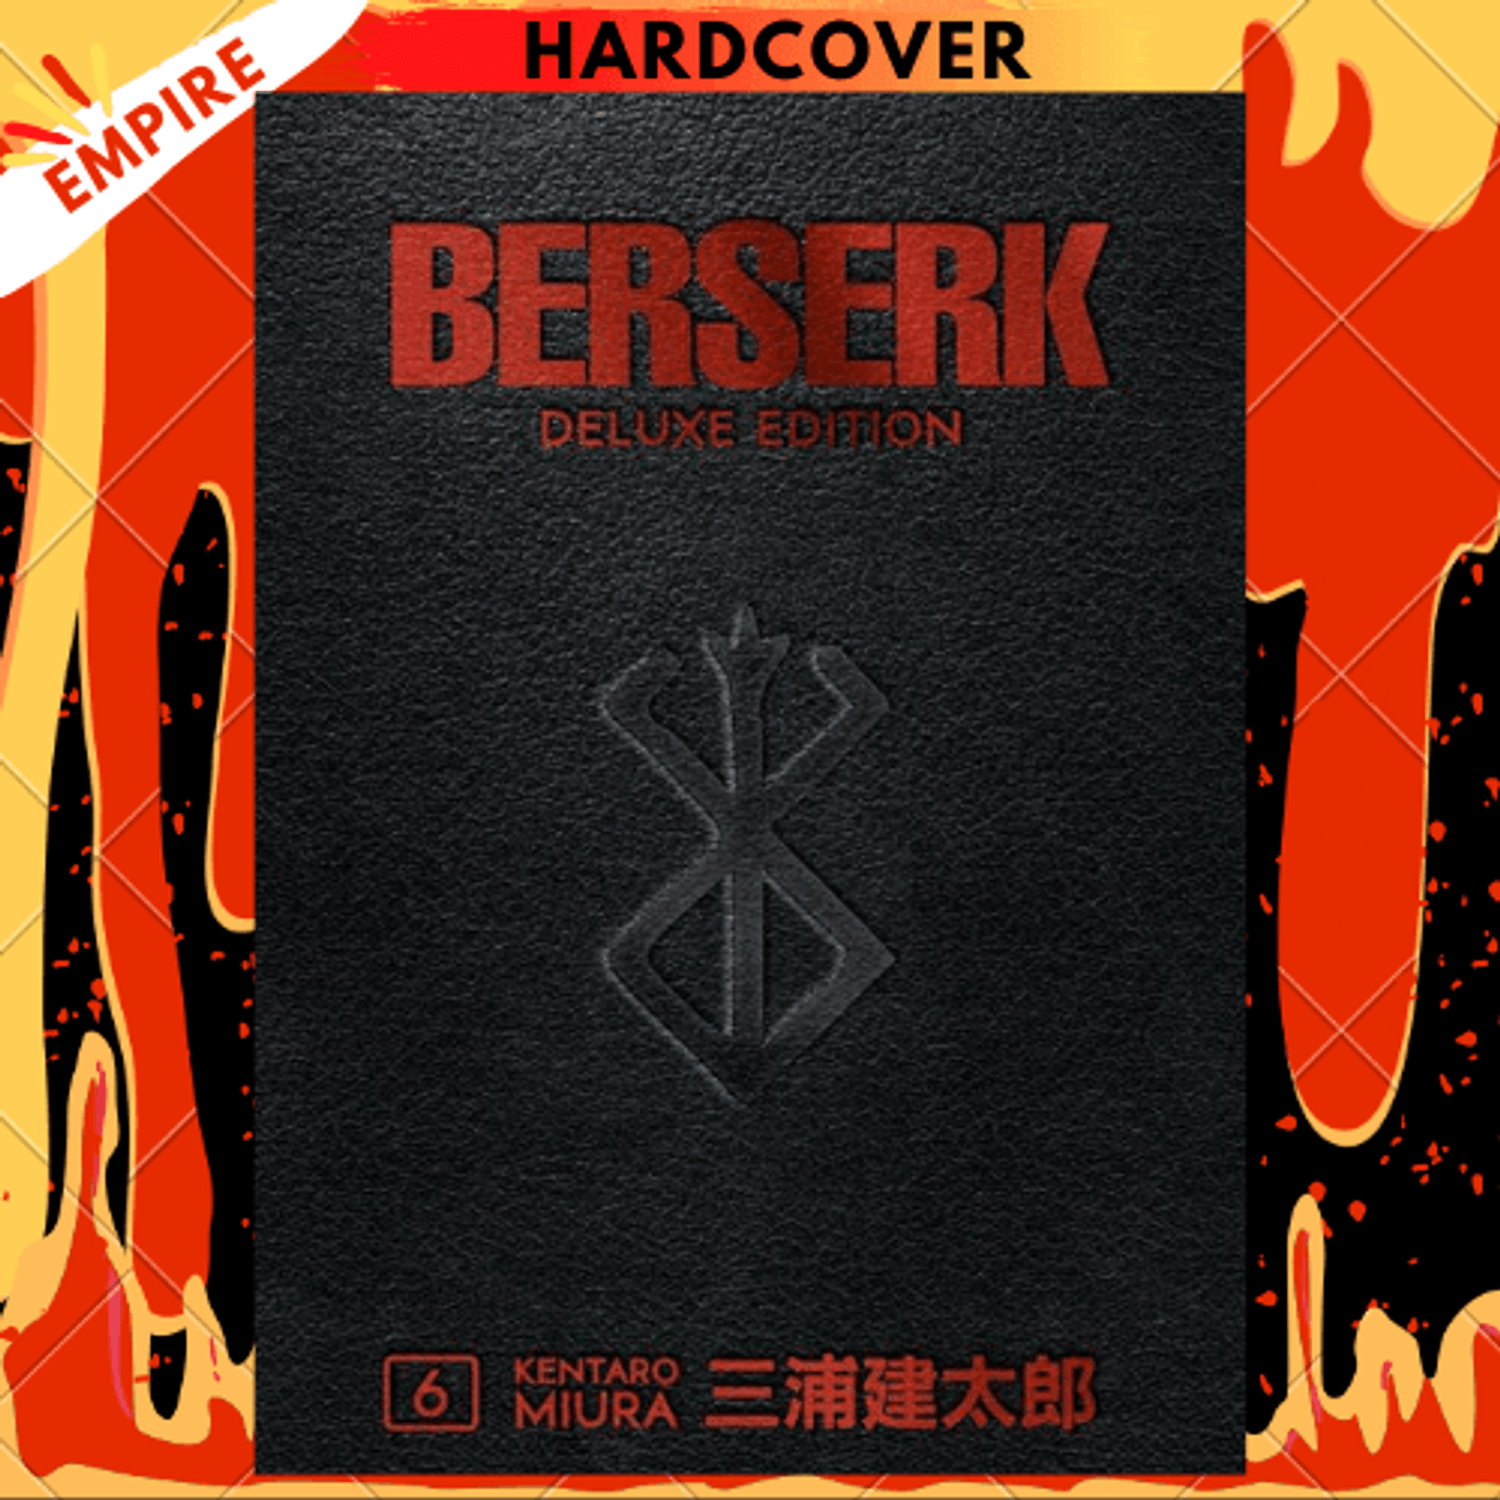 Berserk Deluxe, Volume 6 by Kentaro Miura, Duane Johnson